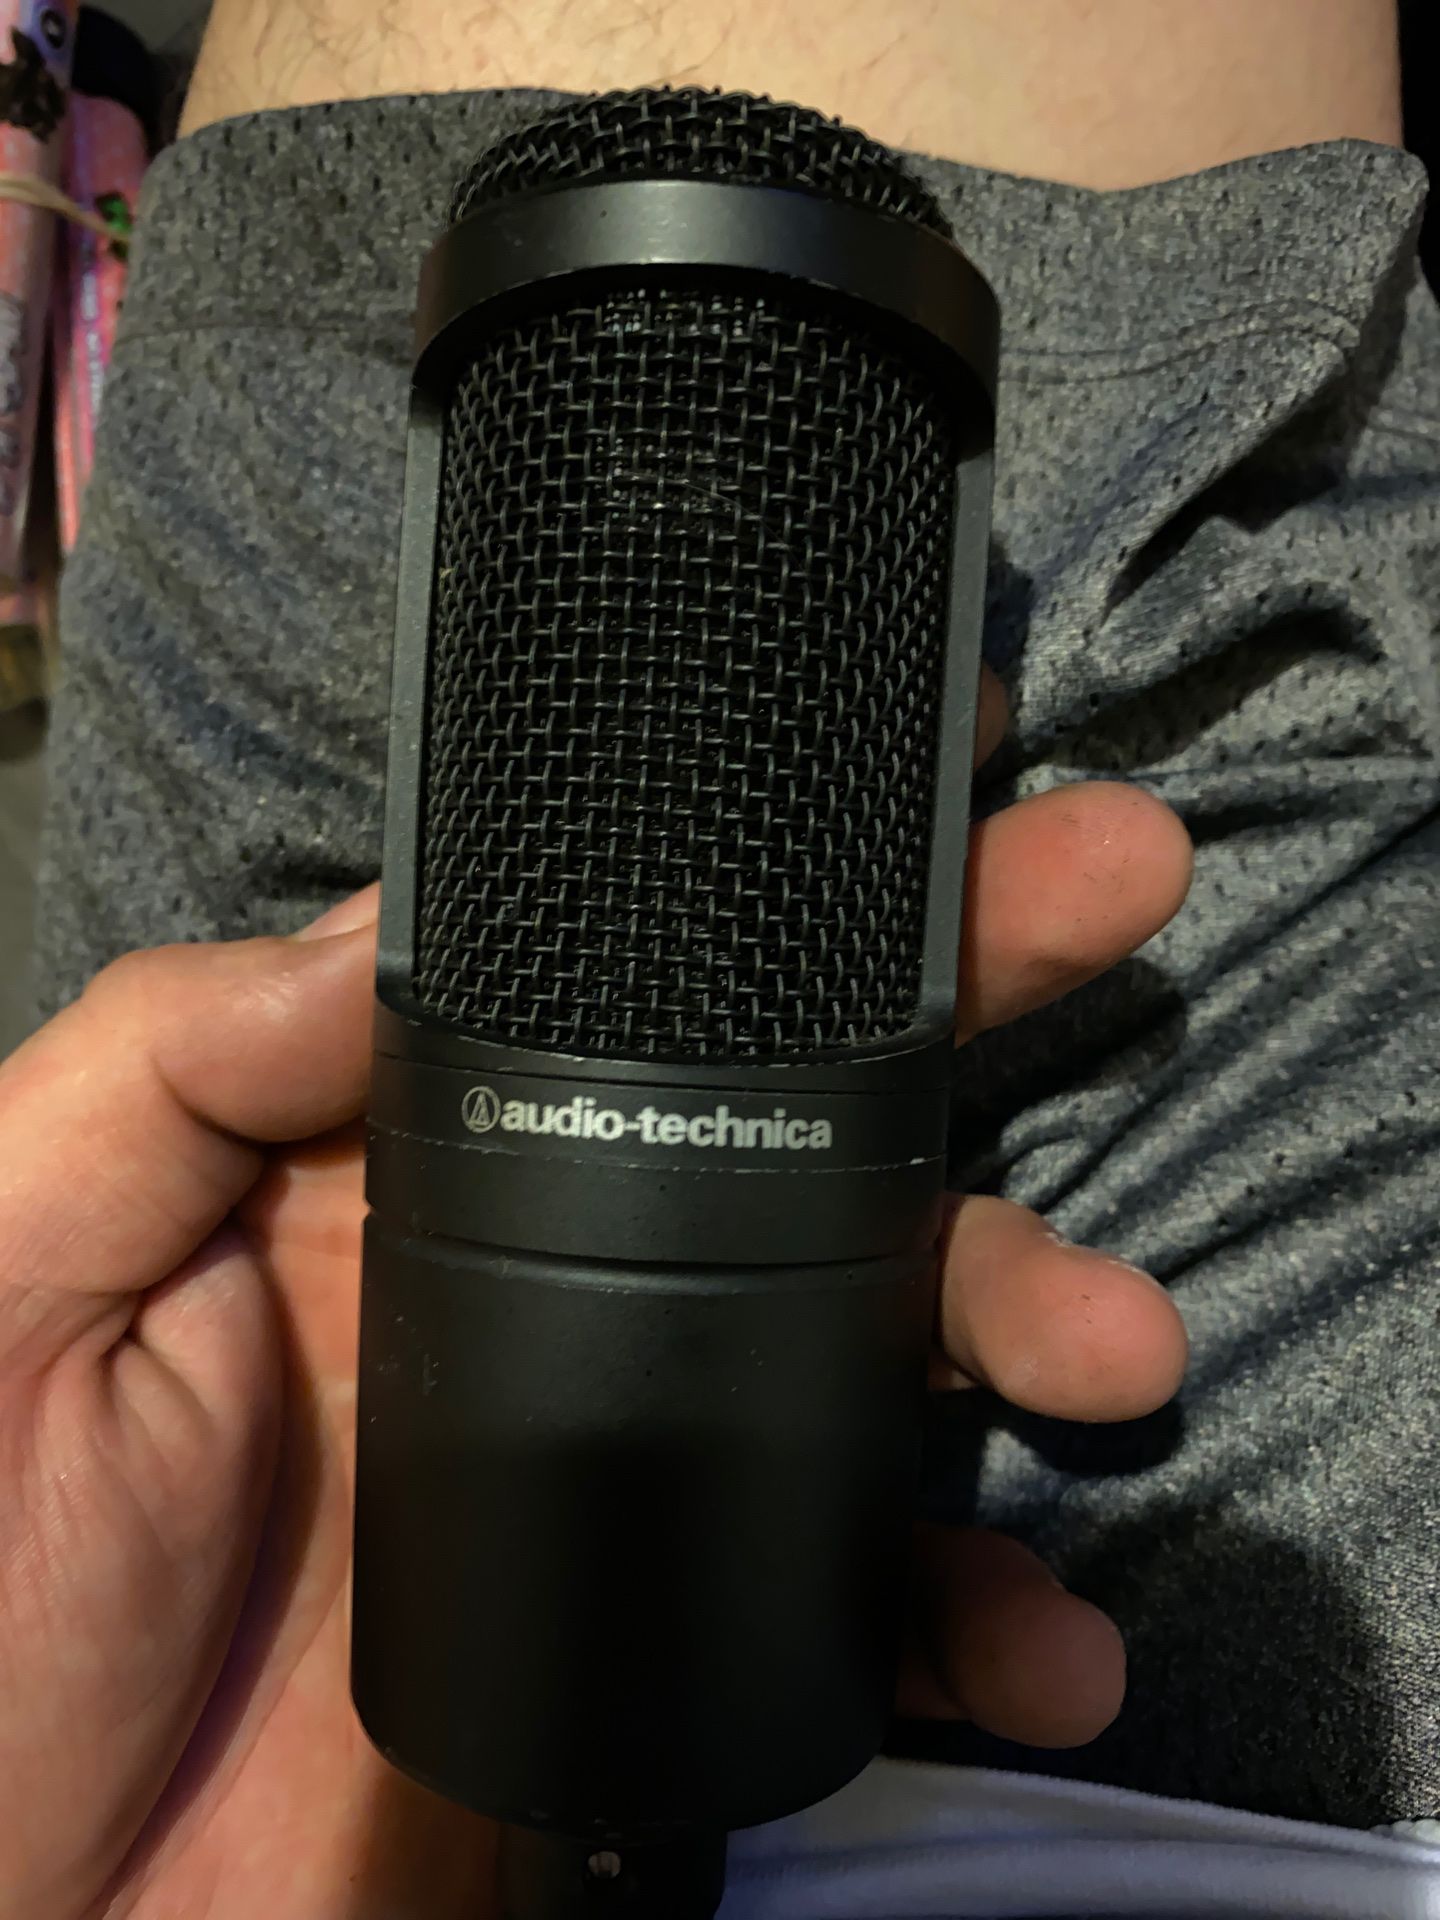 Good condition audio technica microphone